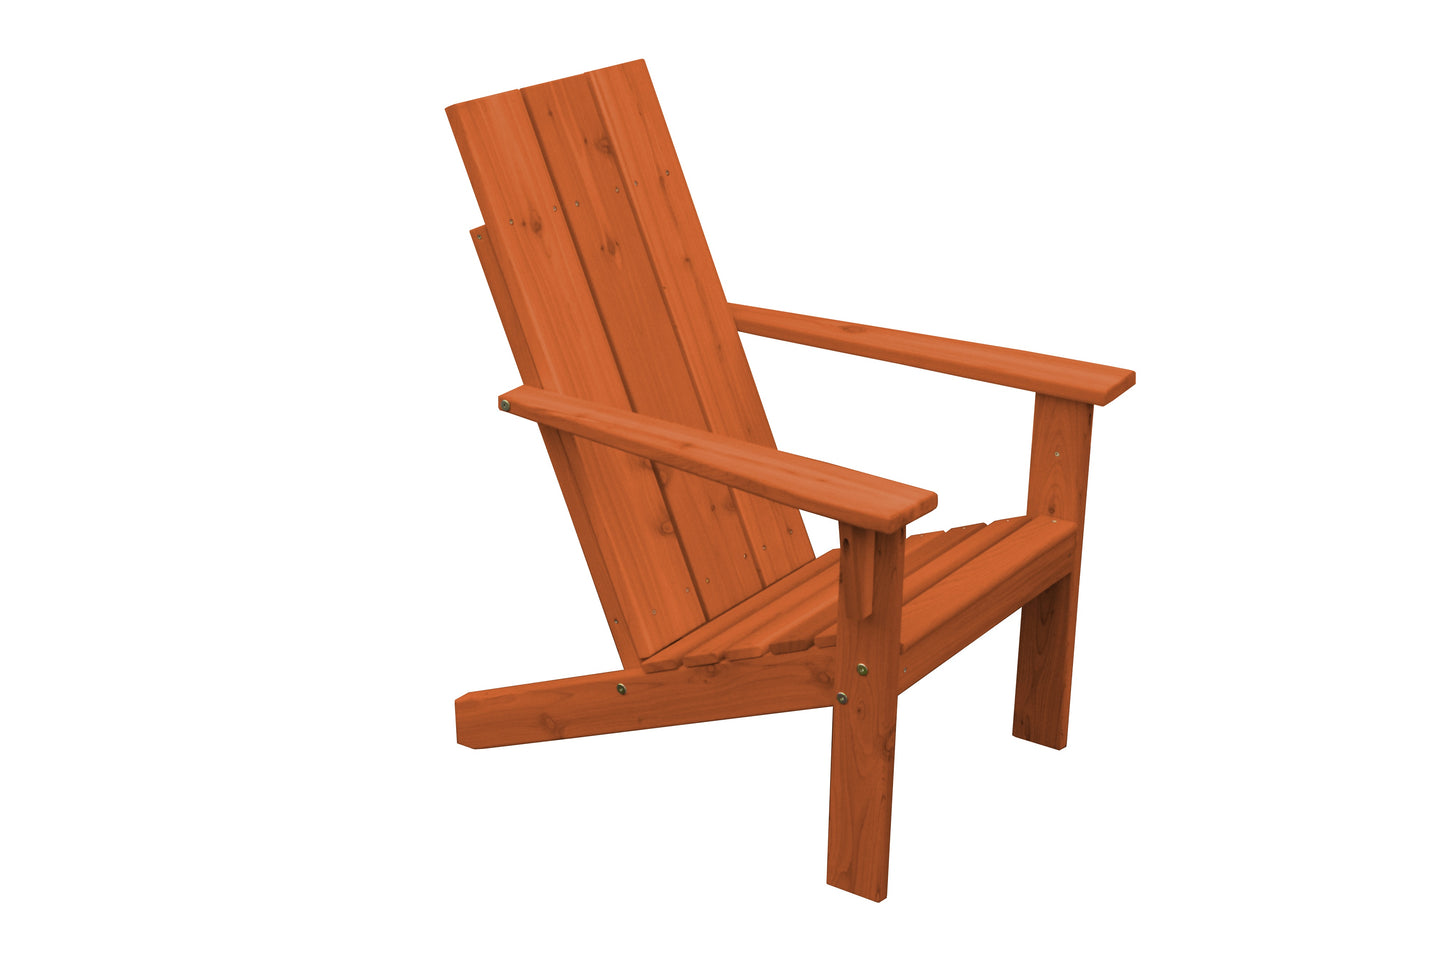 A&L FURNITURE CO. Western Red Cedar Modern Adirondack Chair - LEAD TIME TO SHIP 2 WEEKS